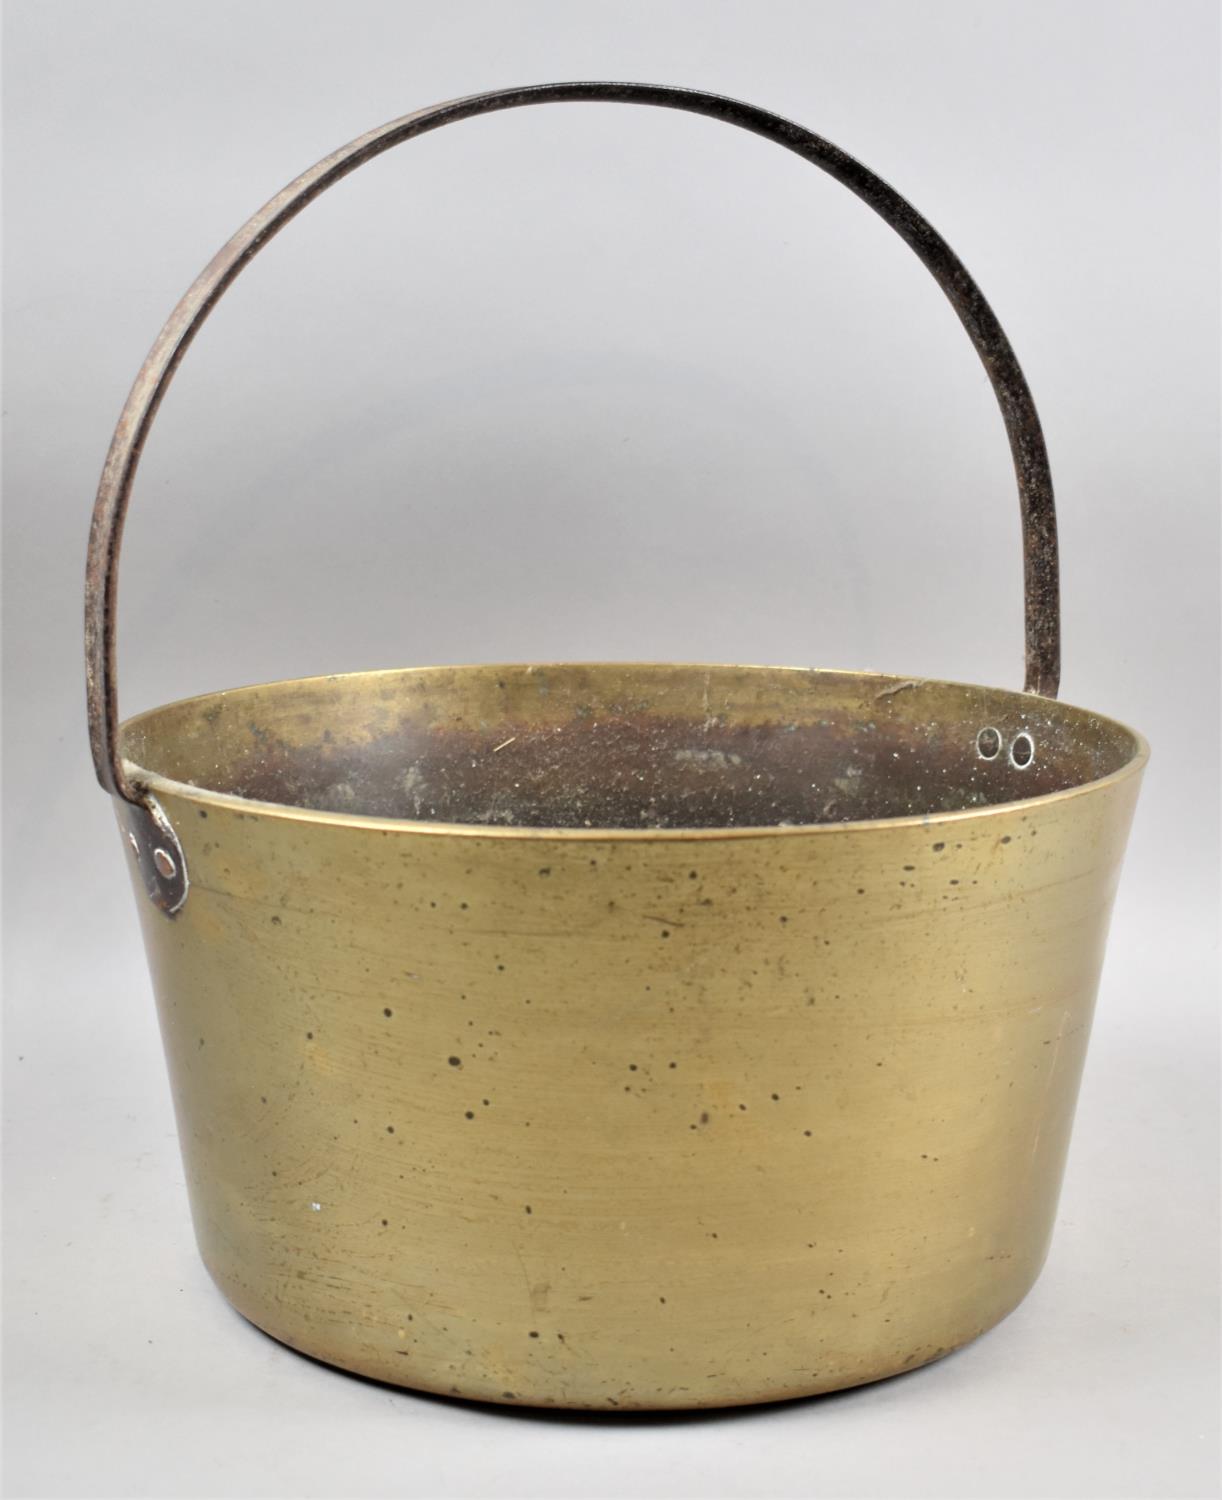 A Vintage Brass Jam Kettle with Iron Loop Handle, 33cm Diameter